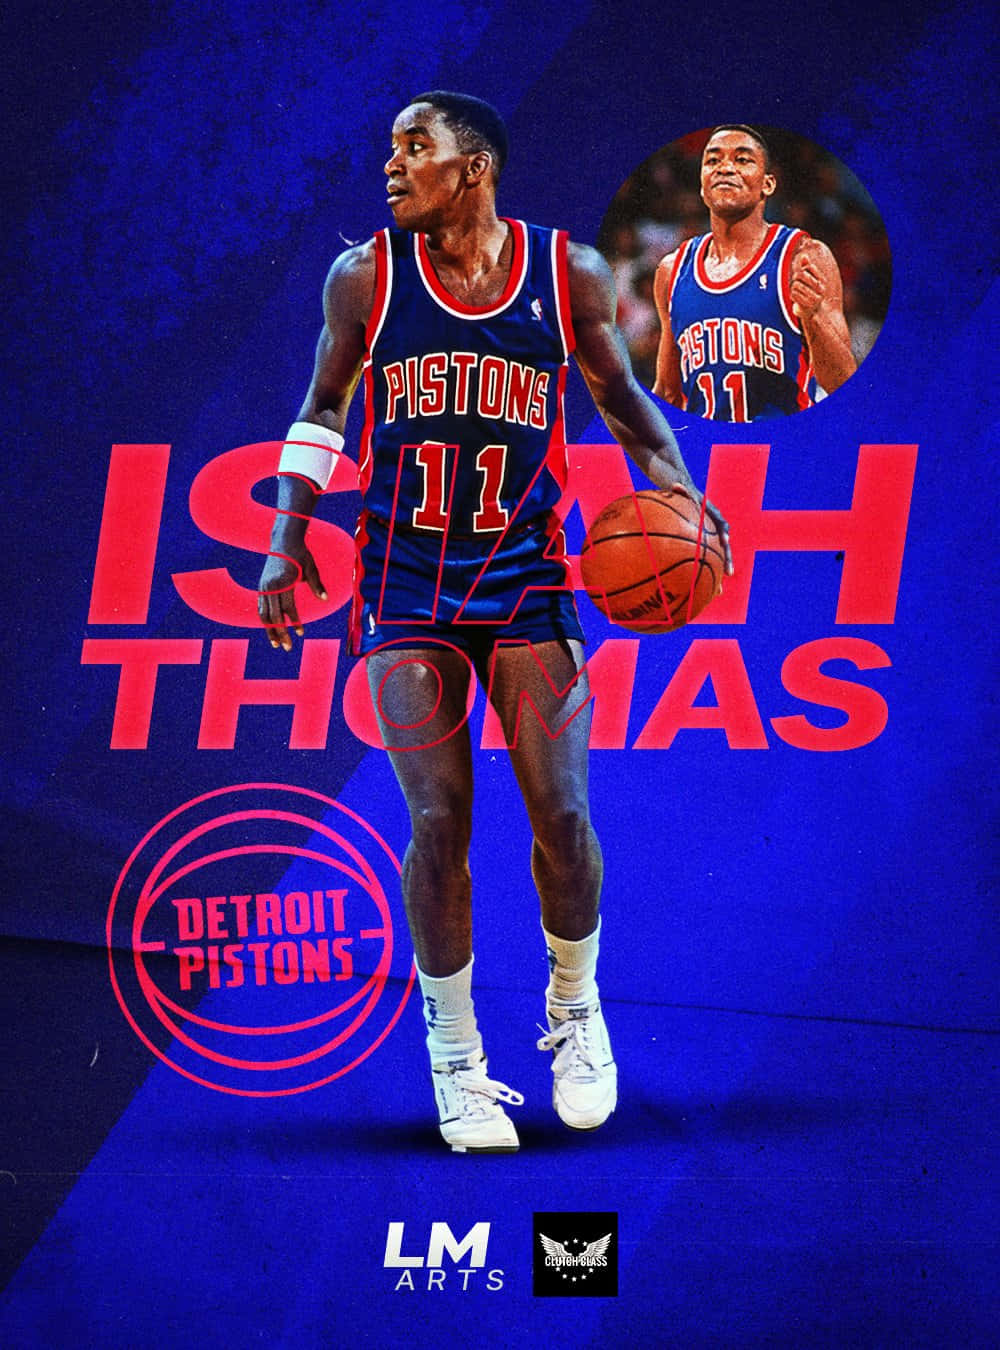 American Former Professional Basketball Player Isiah Thomas Poster Wallpaper